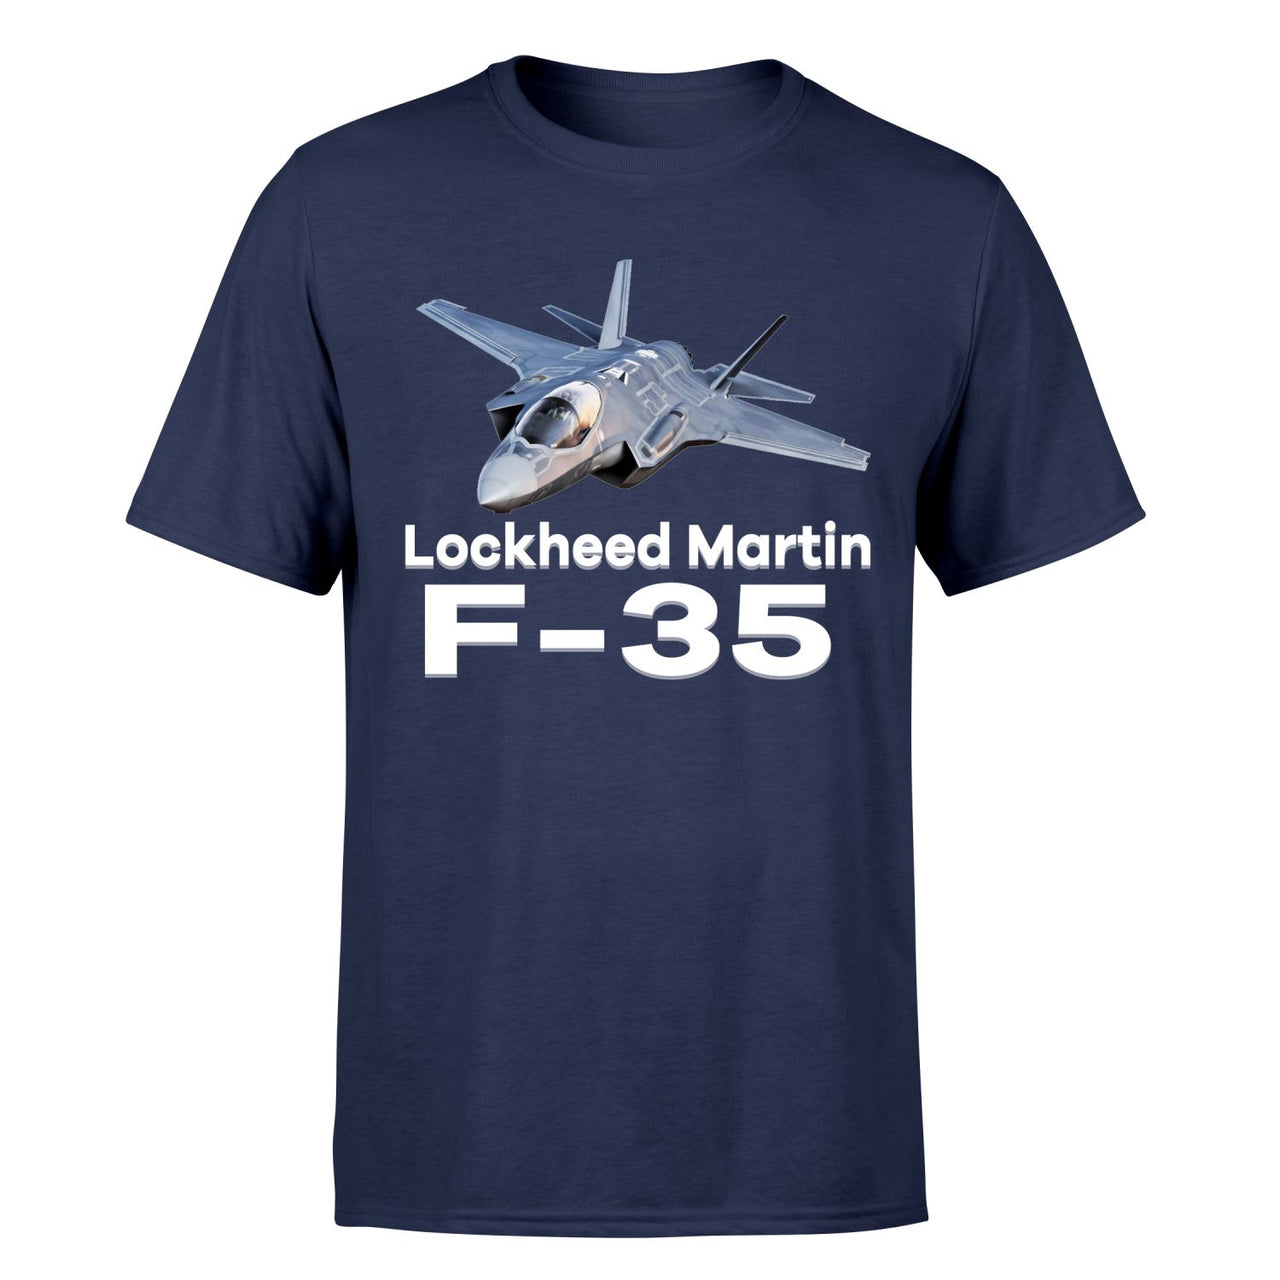 The Lockheed Martin F35 Designed T-Shirts